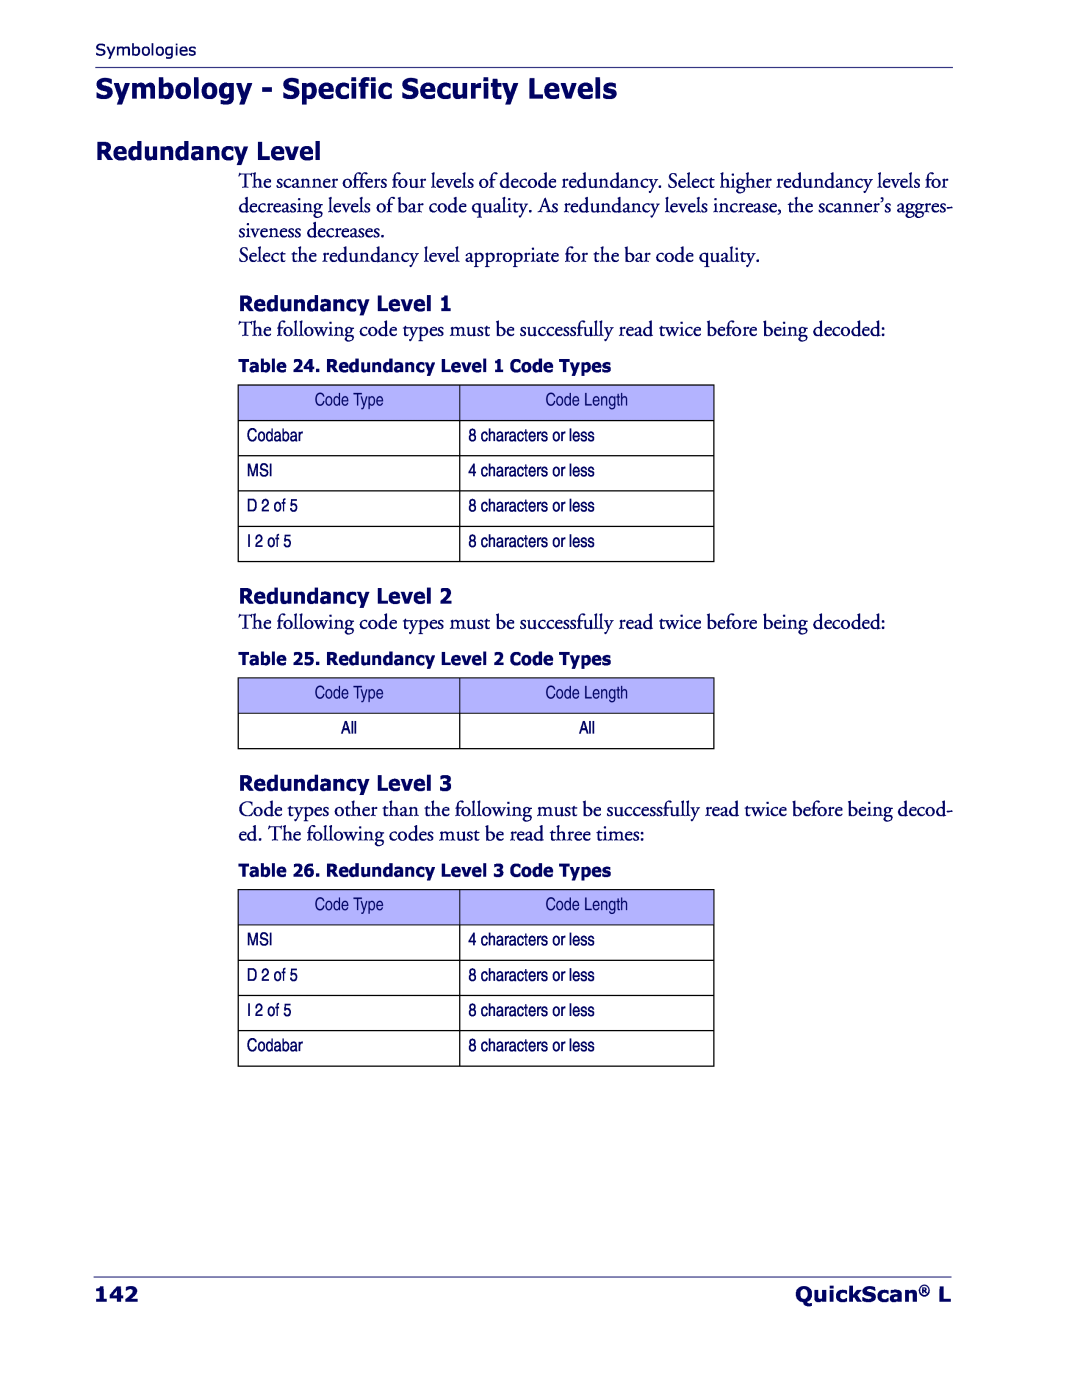 Datalogic Scanning QD 2300 manual Symbology - Specific Security Levels, Redundancy Level, QuickScan L 